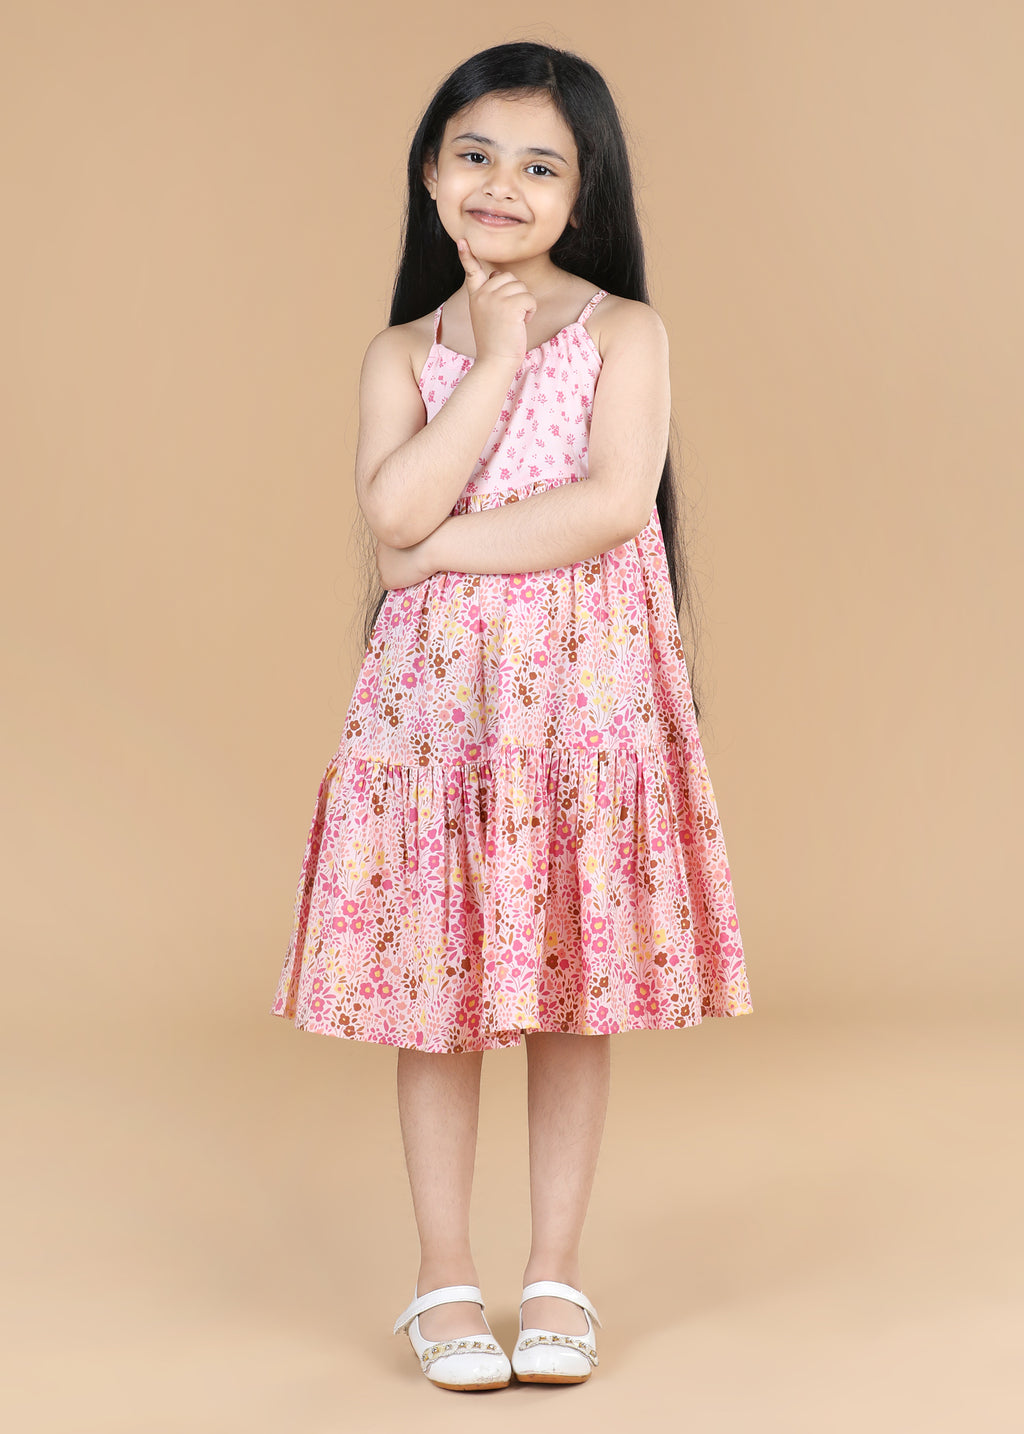 Buy Flower Bed Pink Cotton NiaTiered Dress Girls Online - Rajasthan - Jaipur ID1555509